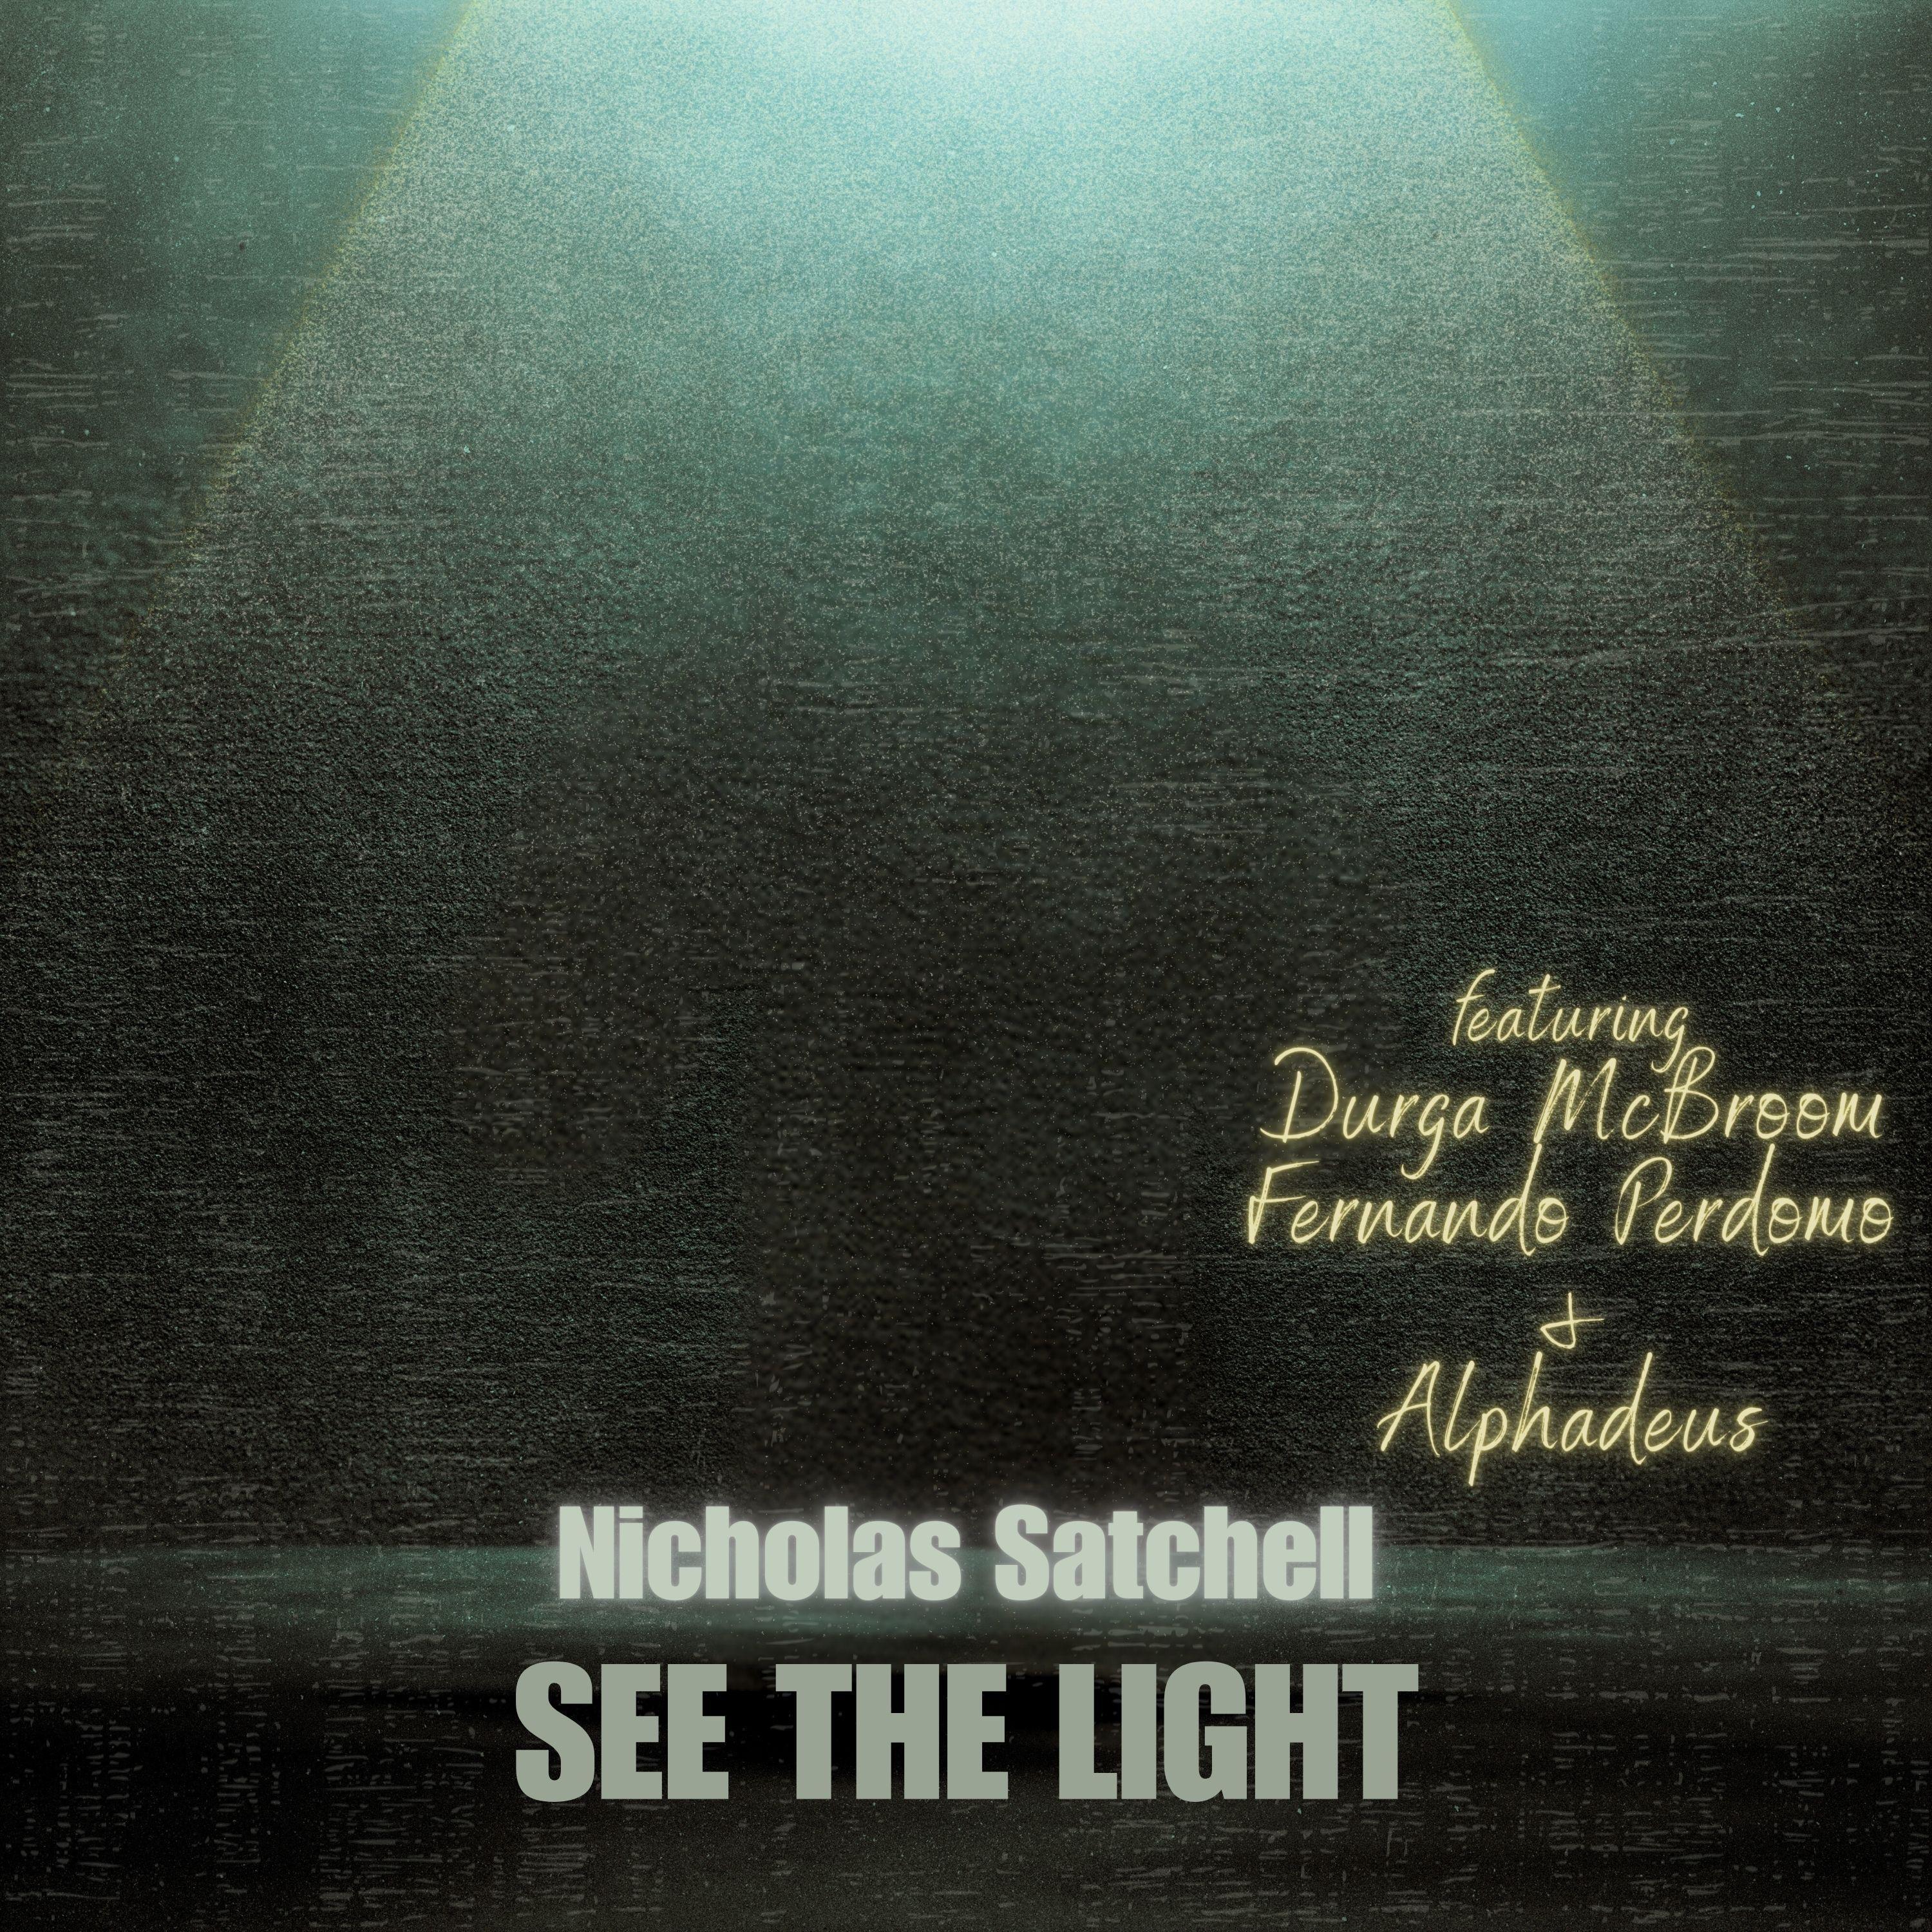 Nicholas Satchell - See The Light (feat. Durga McBroom, Fernando Perdomo & Alphadeus)